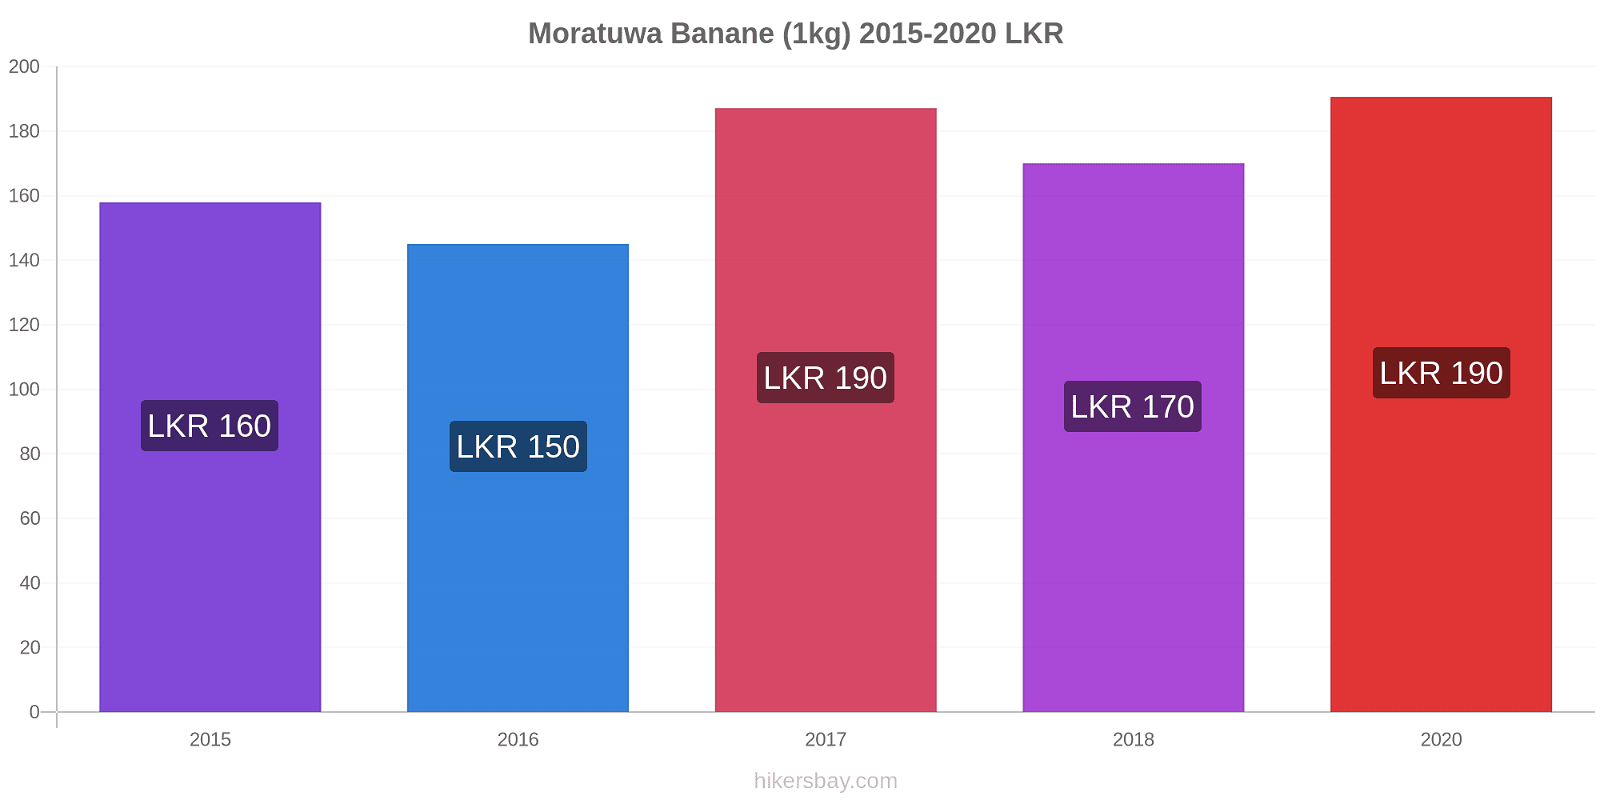 Moratuwa variazioni di prezzo Banana (1kg) hikersbay.com